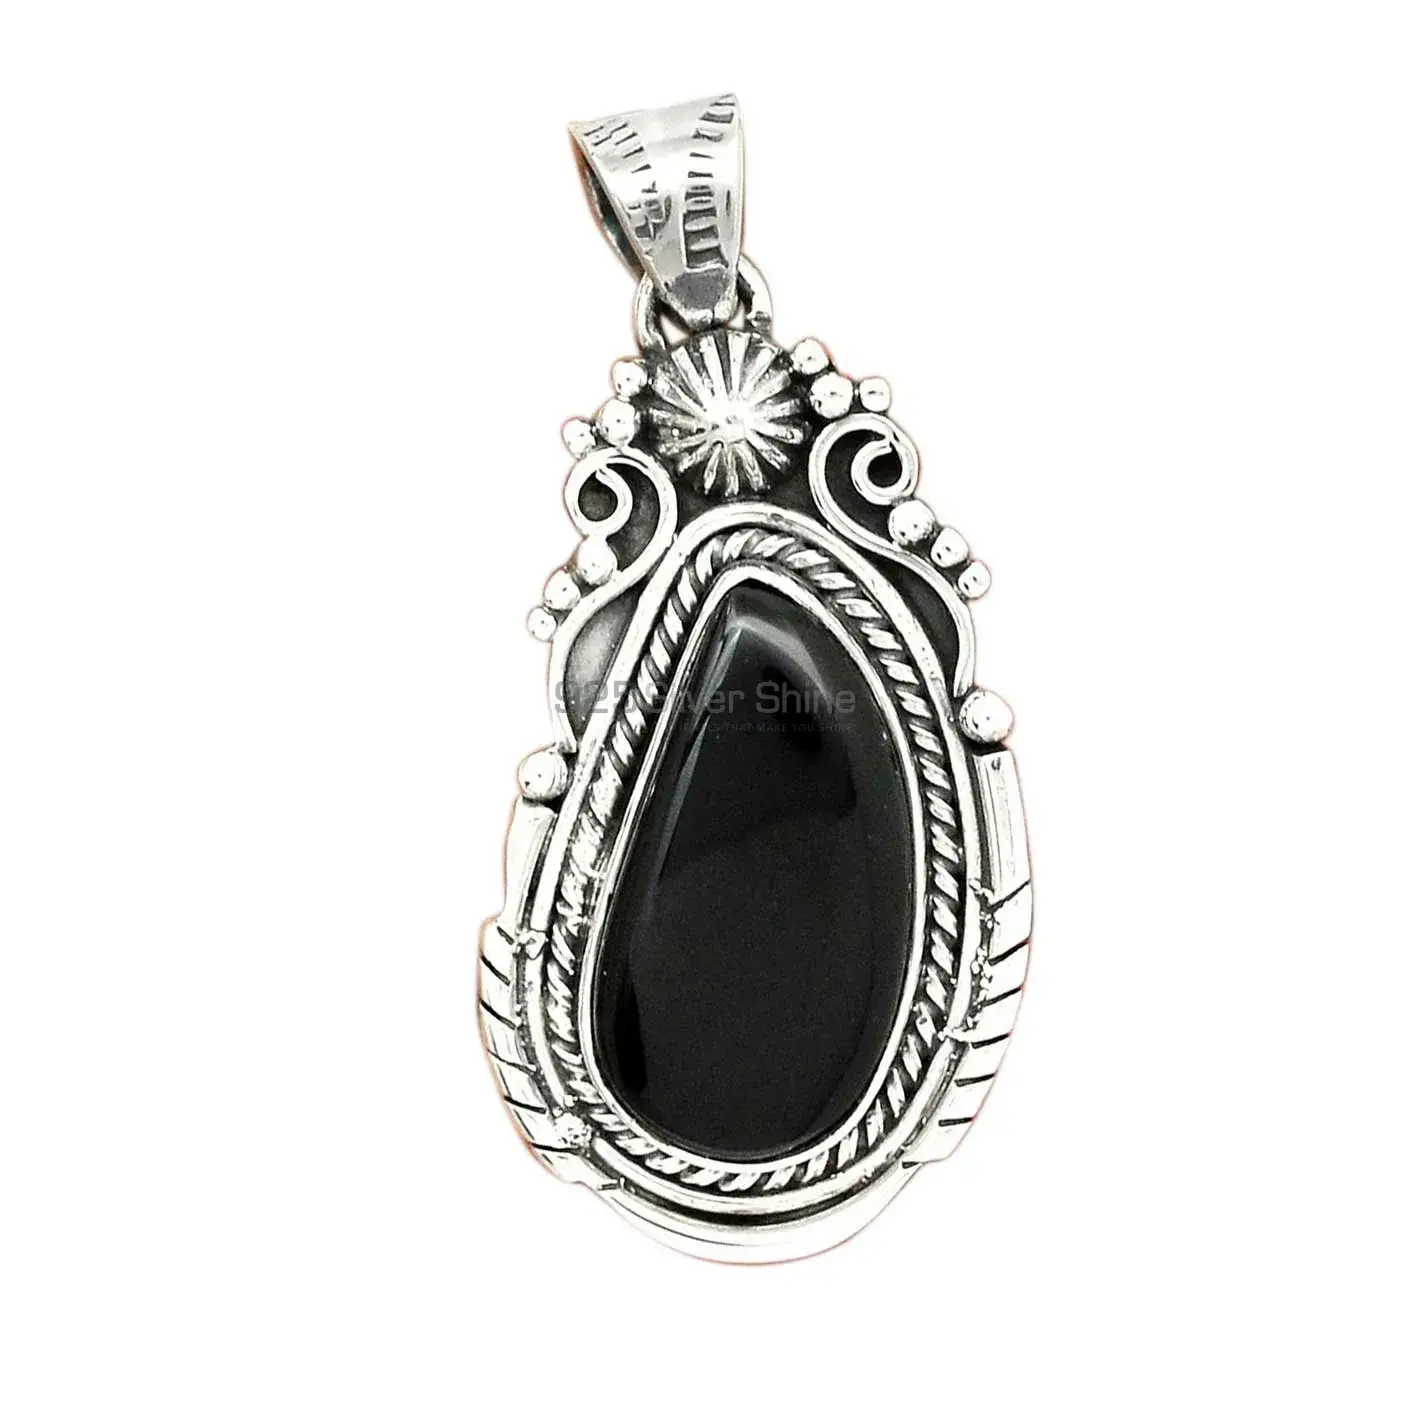 Top Quality Black Onyx Gemstone Handmade Pendants In 925 Sterling Silver Jewelry 925SP43-3_1